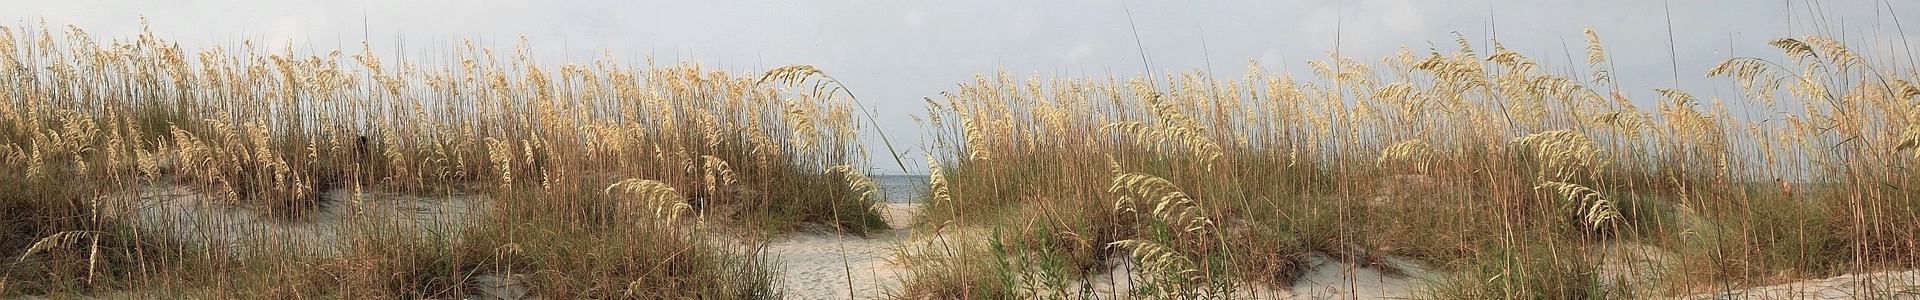 sea oats on dunes